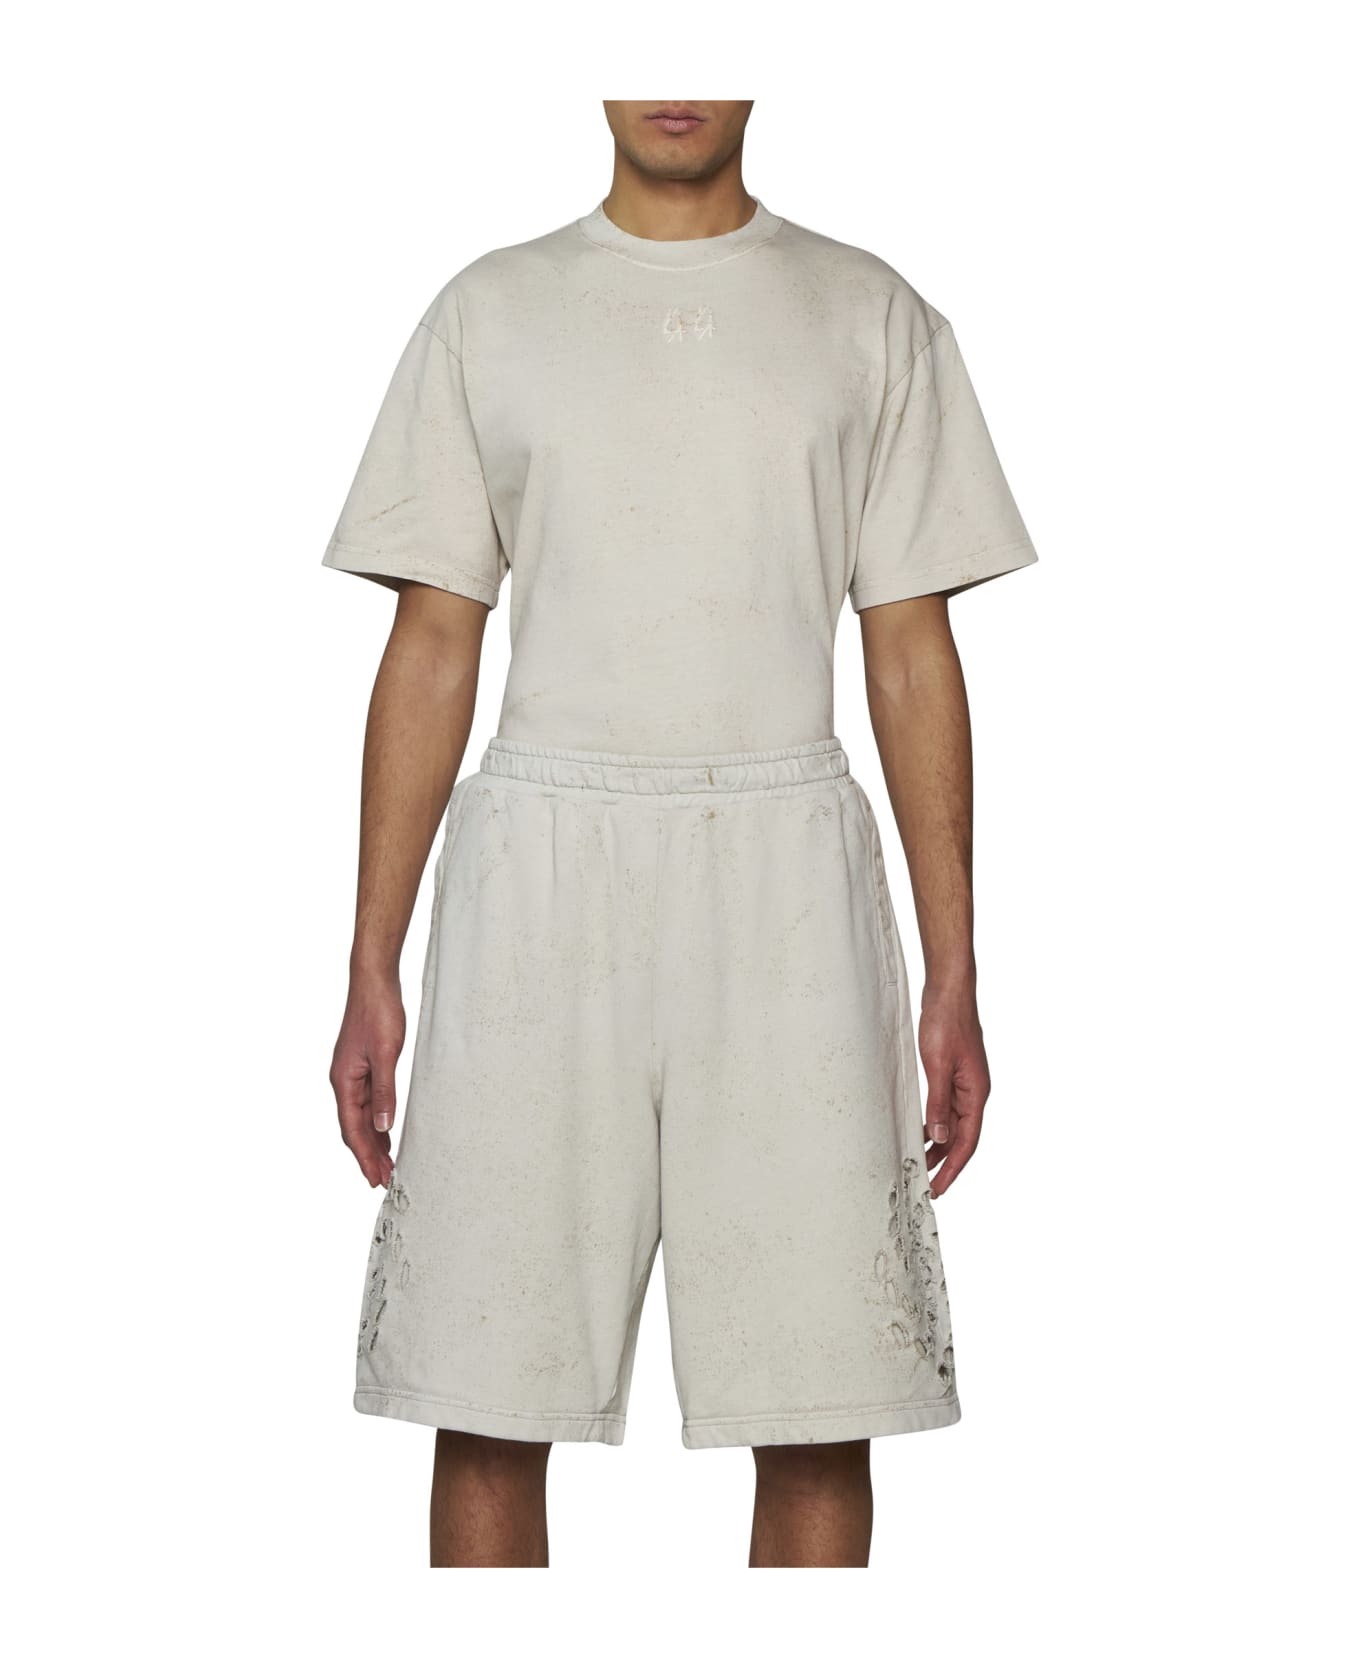 44 Label Group Shorts - Dirty white+gyps ショートパンツ